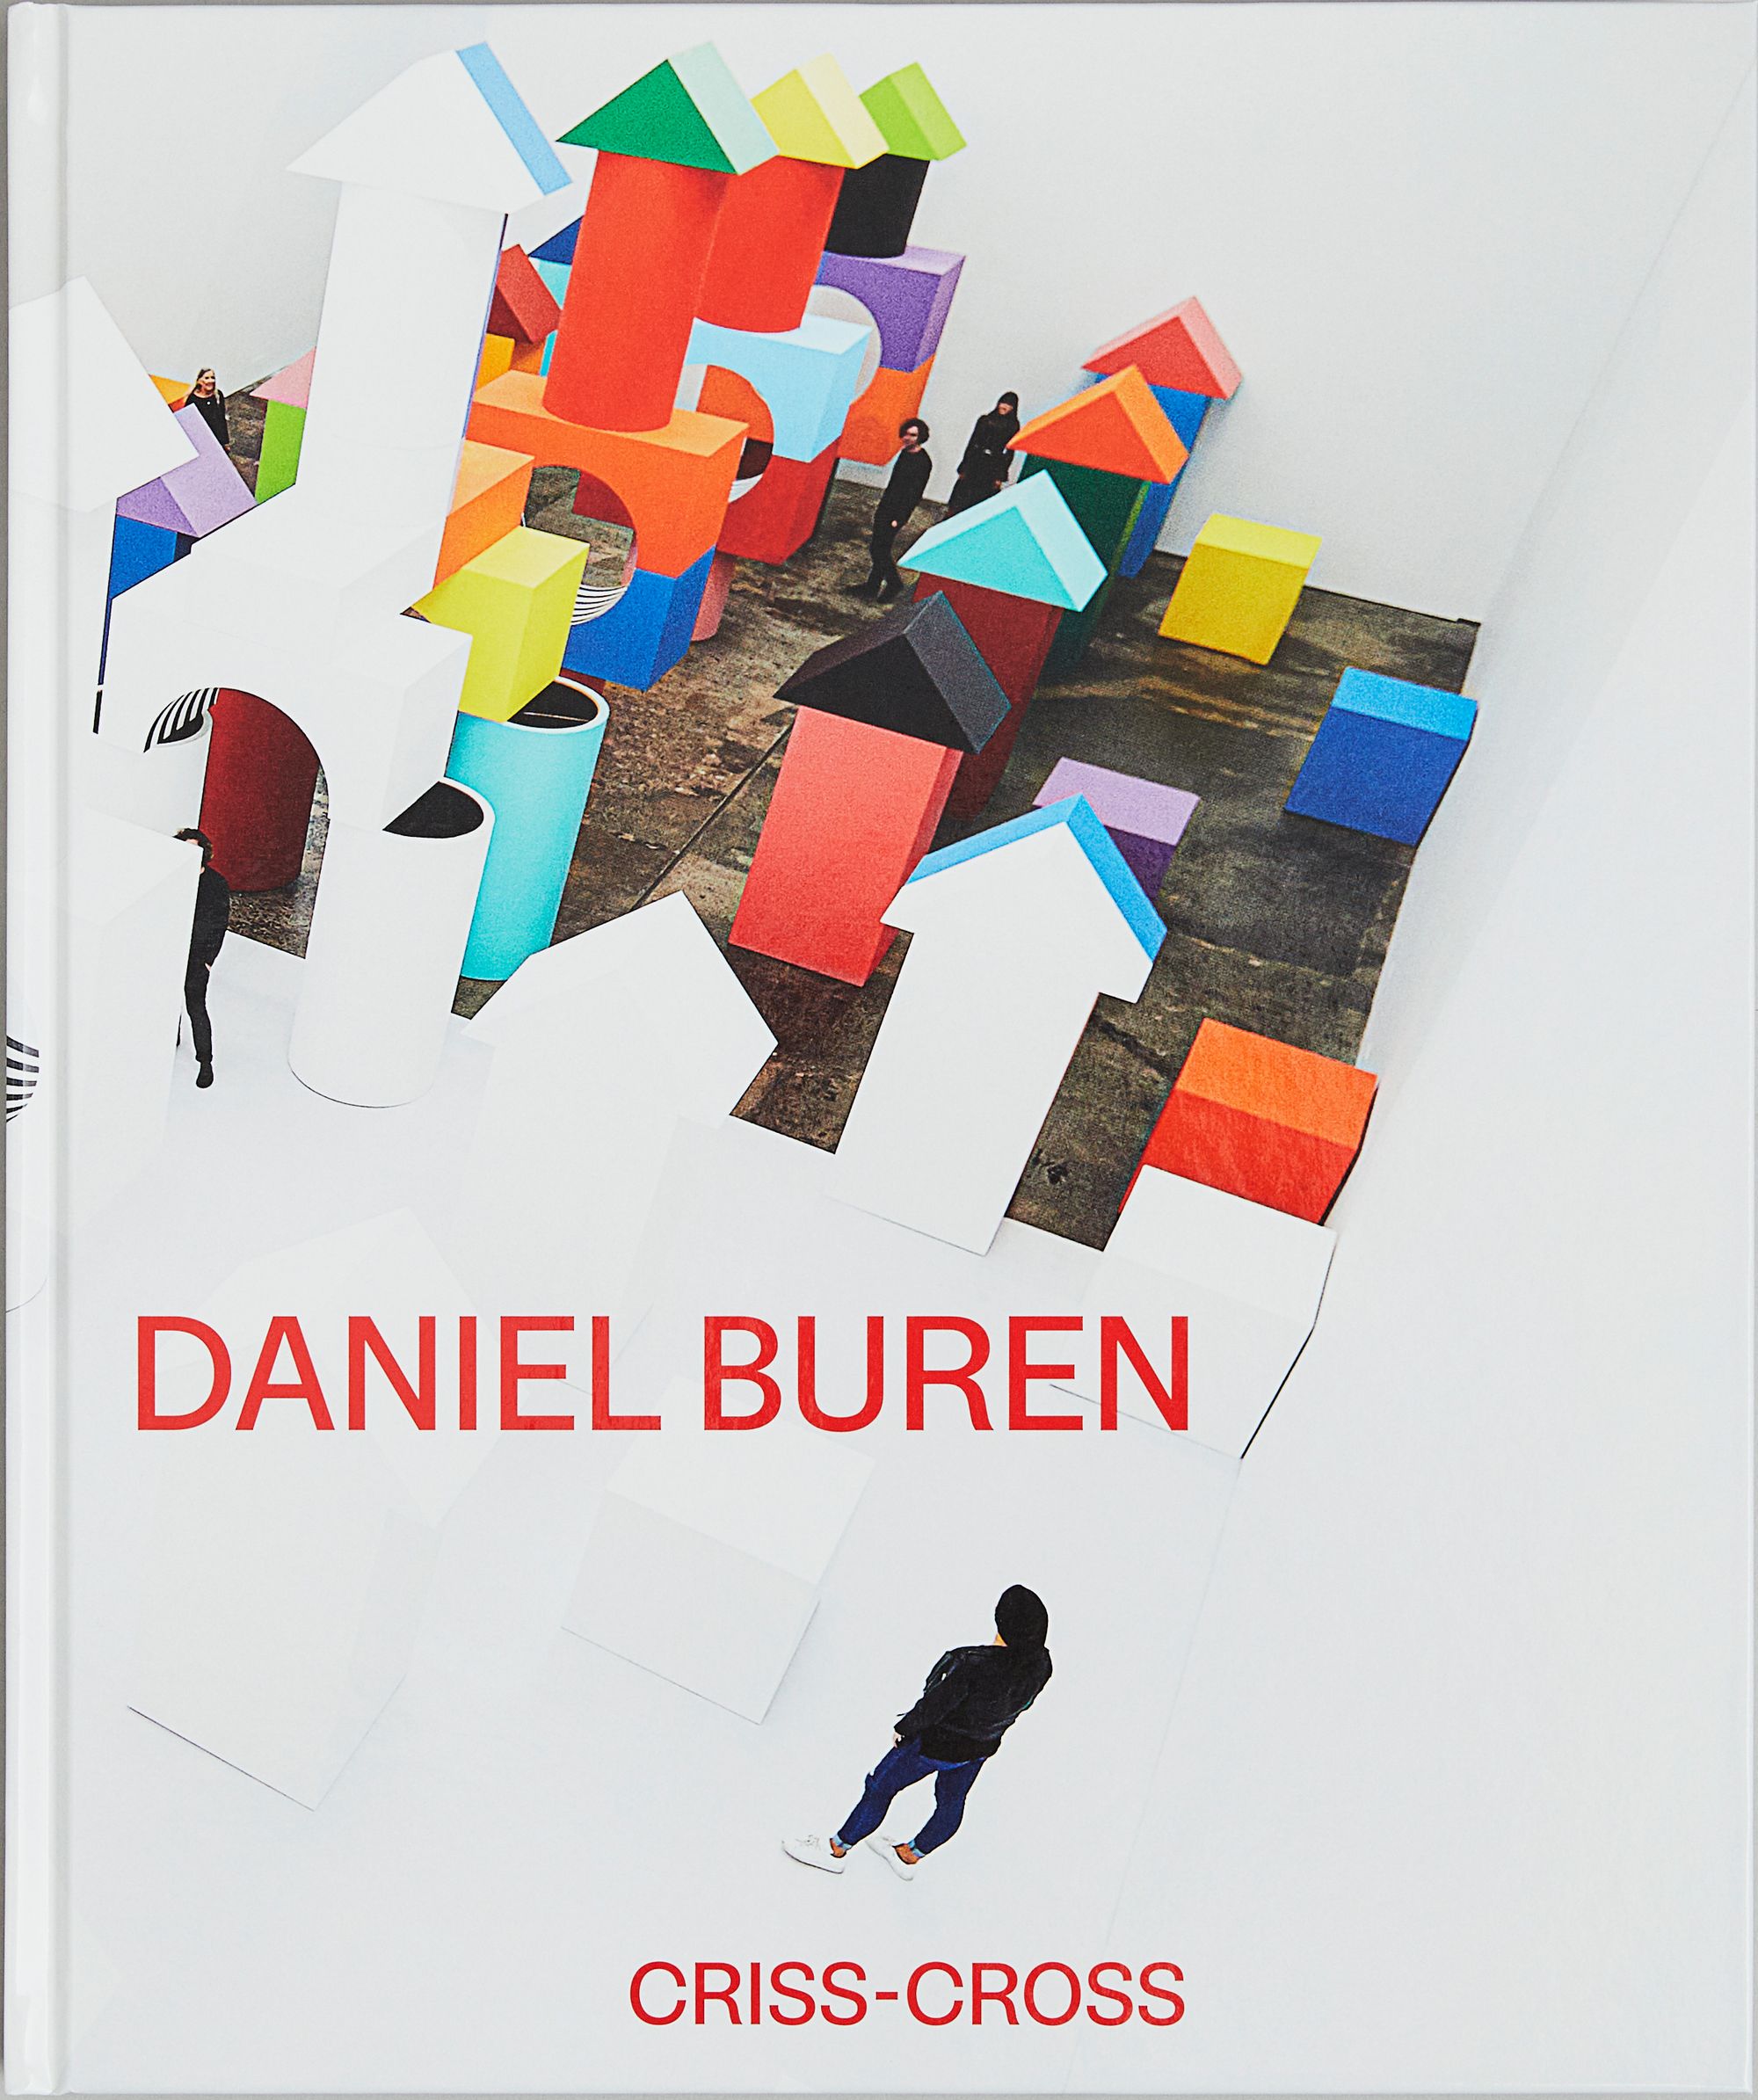 Detail view of Daniel Buren: Criss-Cross against a plain gray background